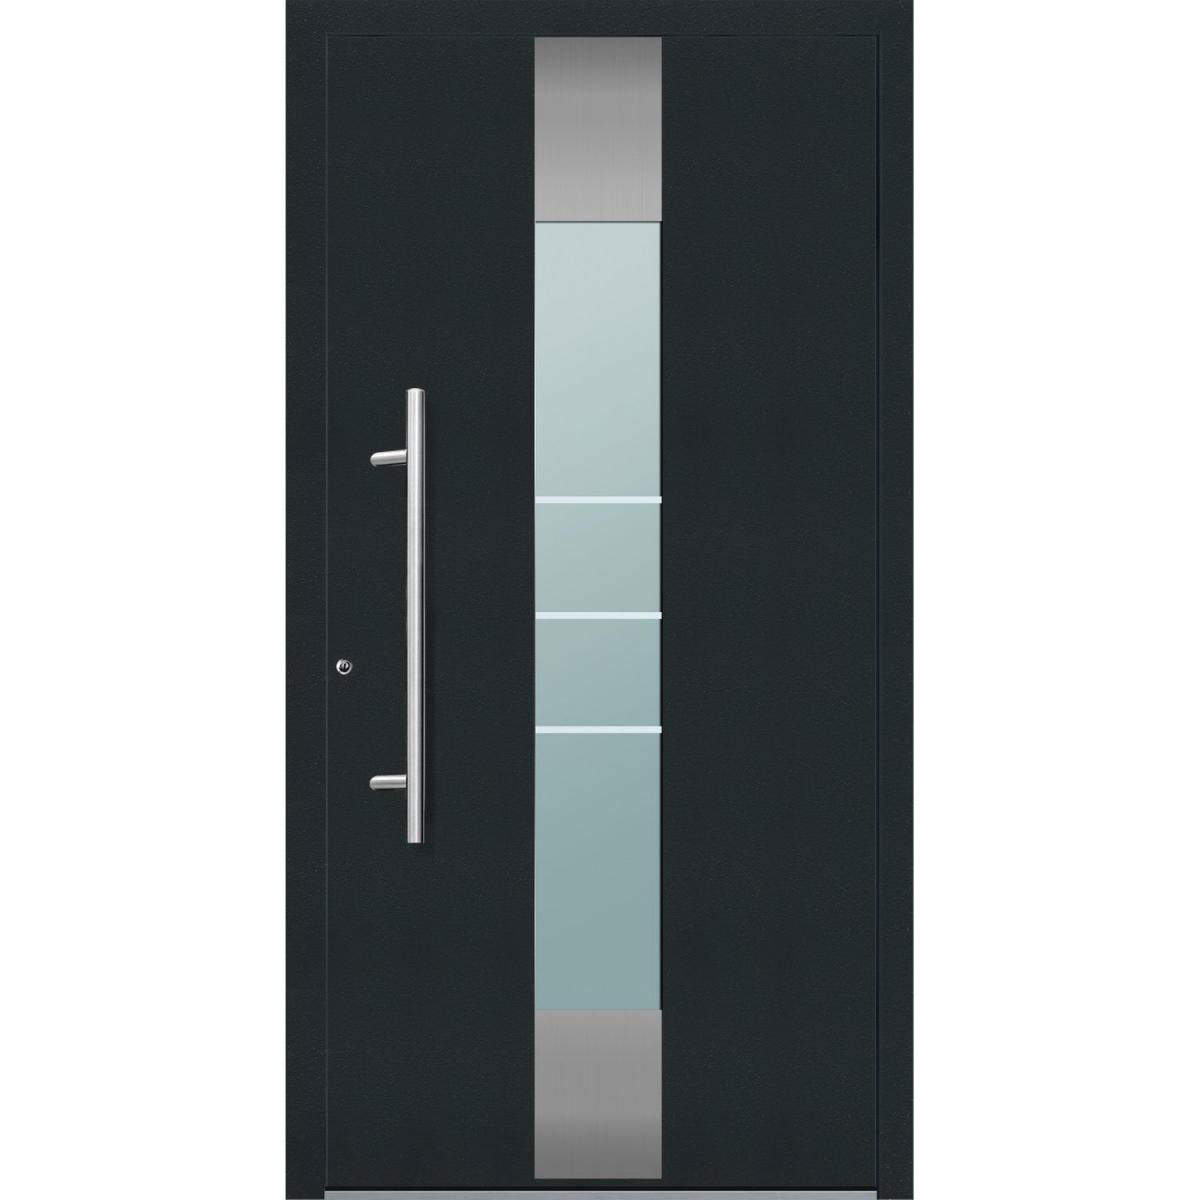 Aluminium Sicherheits-Haustür „Catania Exklusiv“, 75mm, anthrazit, 100x210 cm, Anschlag links, inkl. Griffset